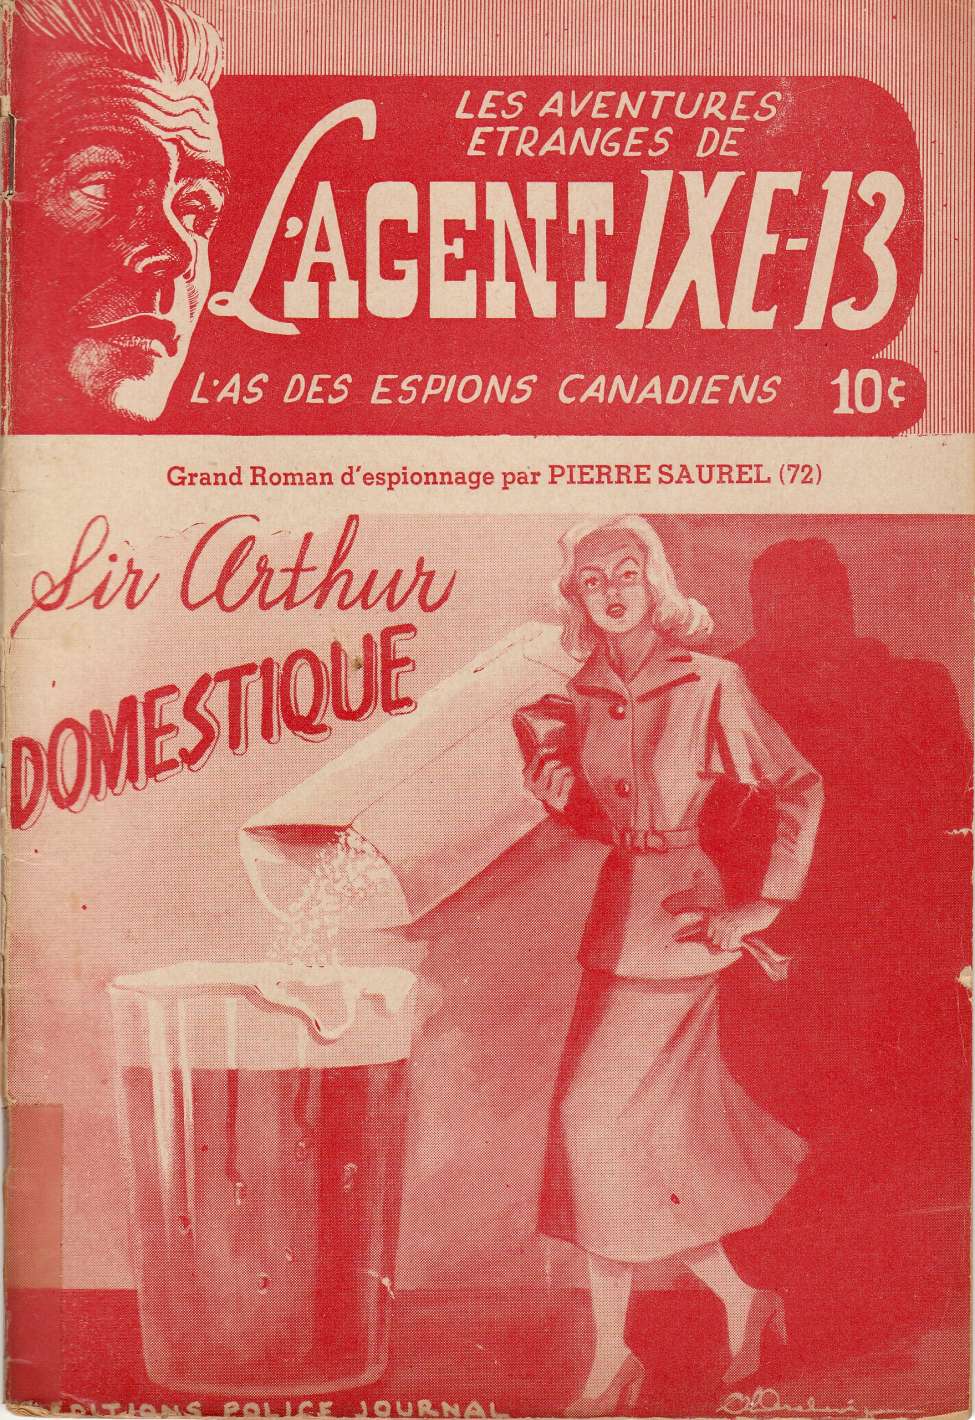 Book Cover For L'Agent IXE-13 v2 72 - Sir Arthur domestique